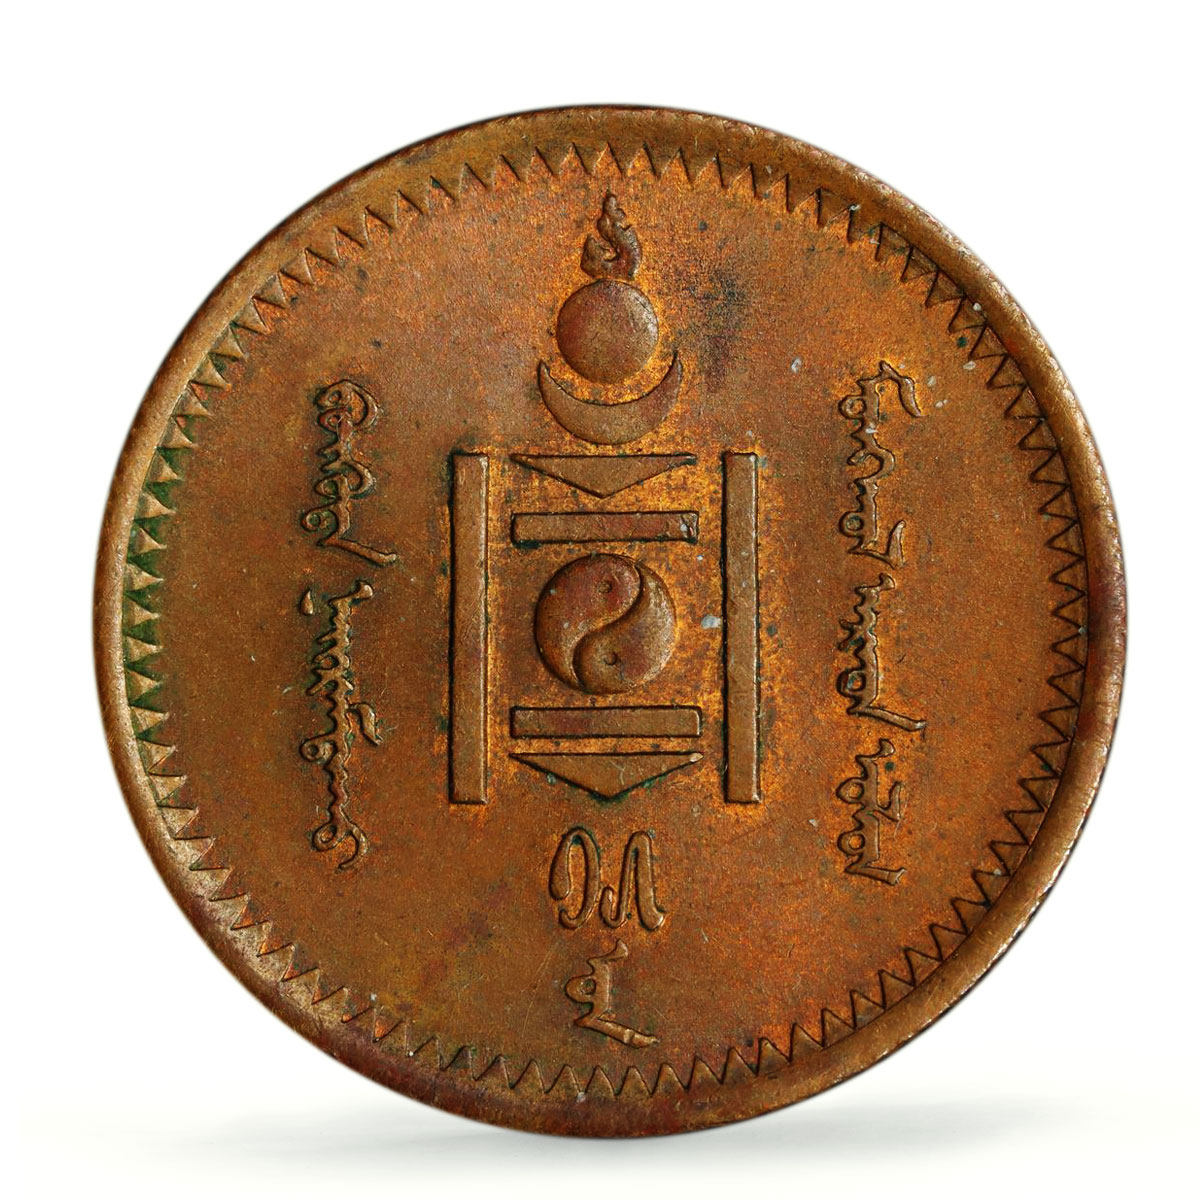 Mongolia 2 mongo Republic Regular Coinage KM-2 MS62 PCGS copper coin 1925